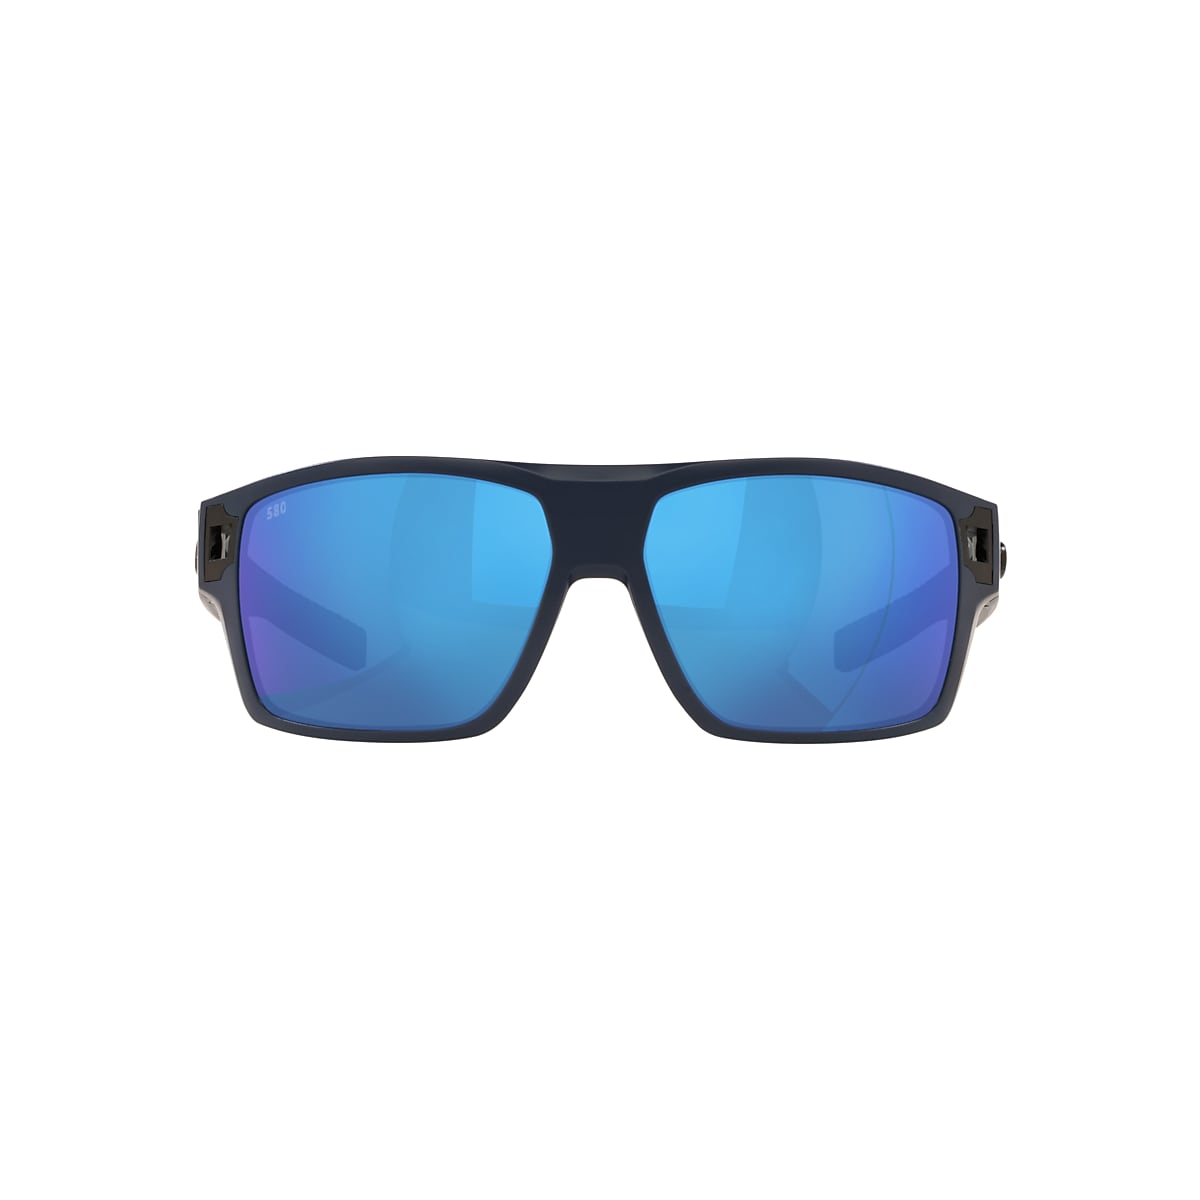 Diego Polarized Sunglasses in Blue Mirror